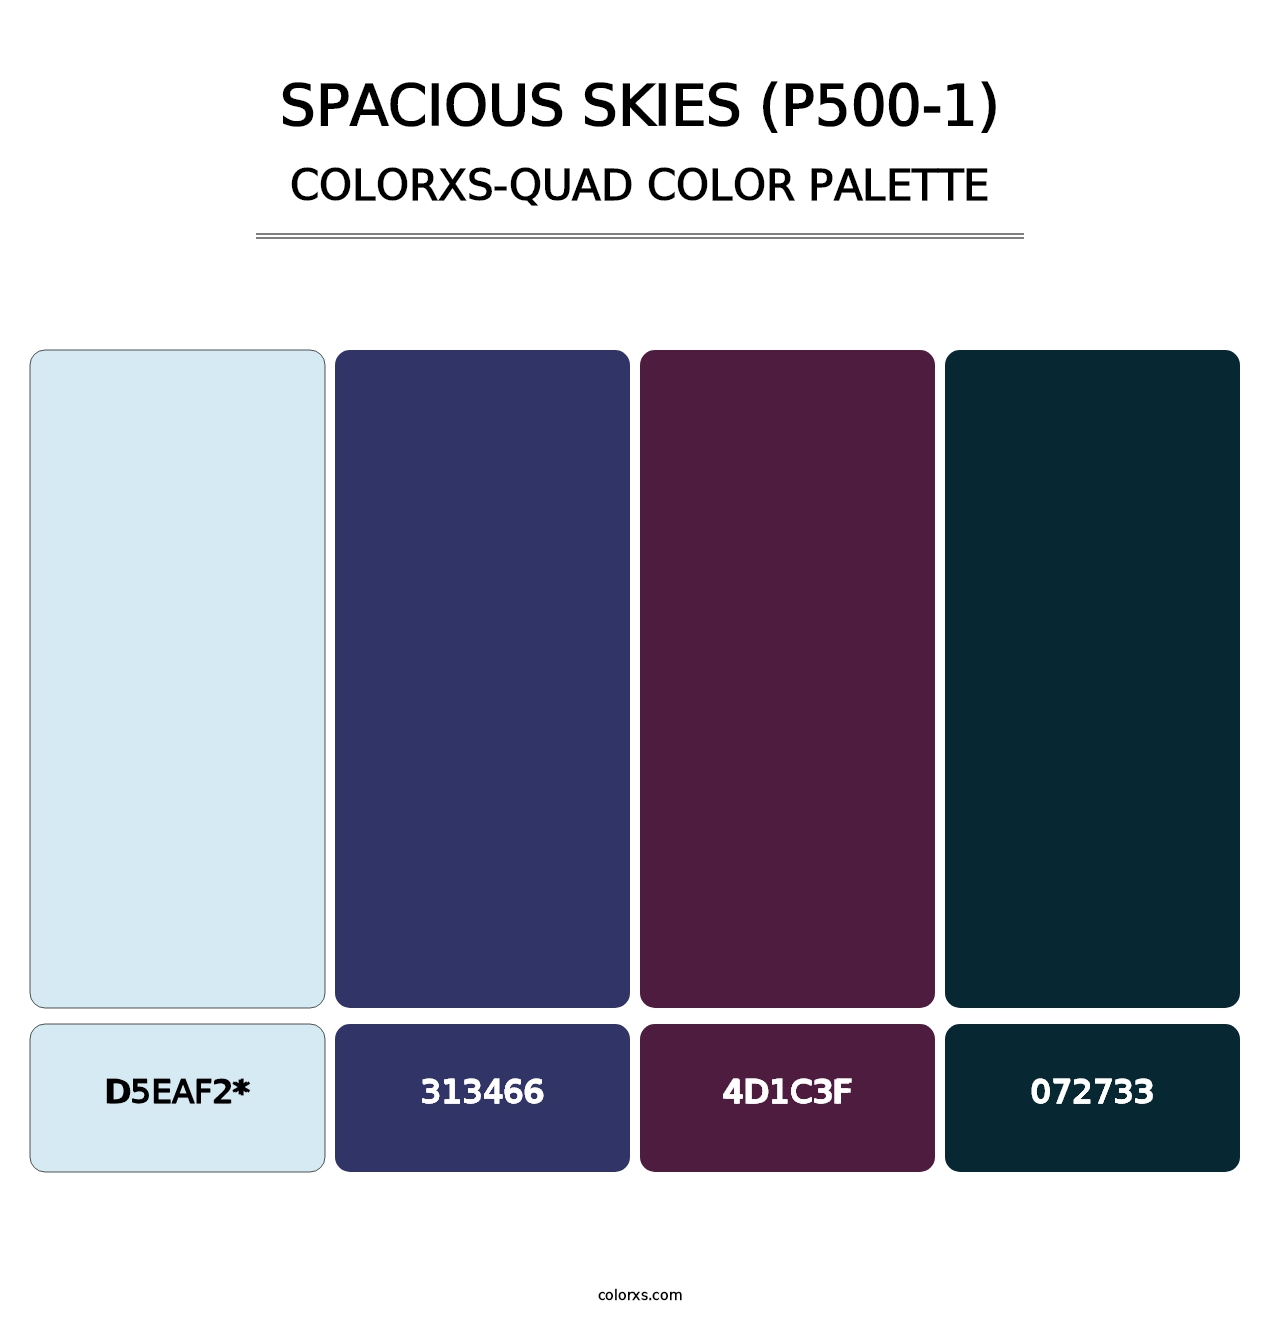 Spacious Skies (P500-1) - Colorxs Quad Palette